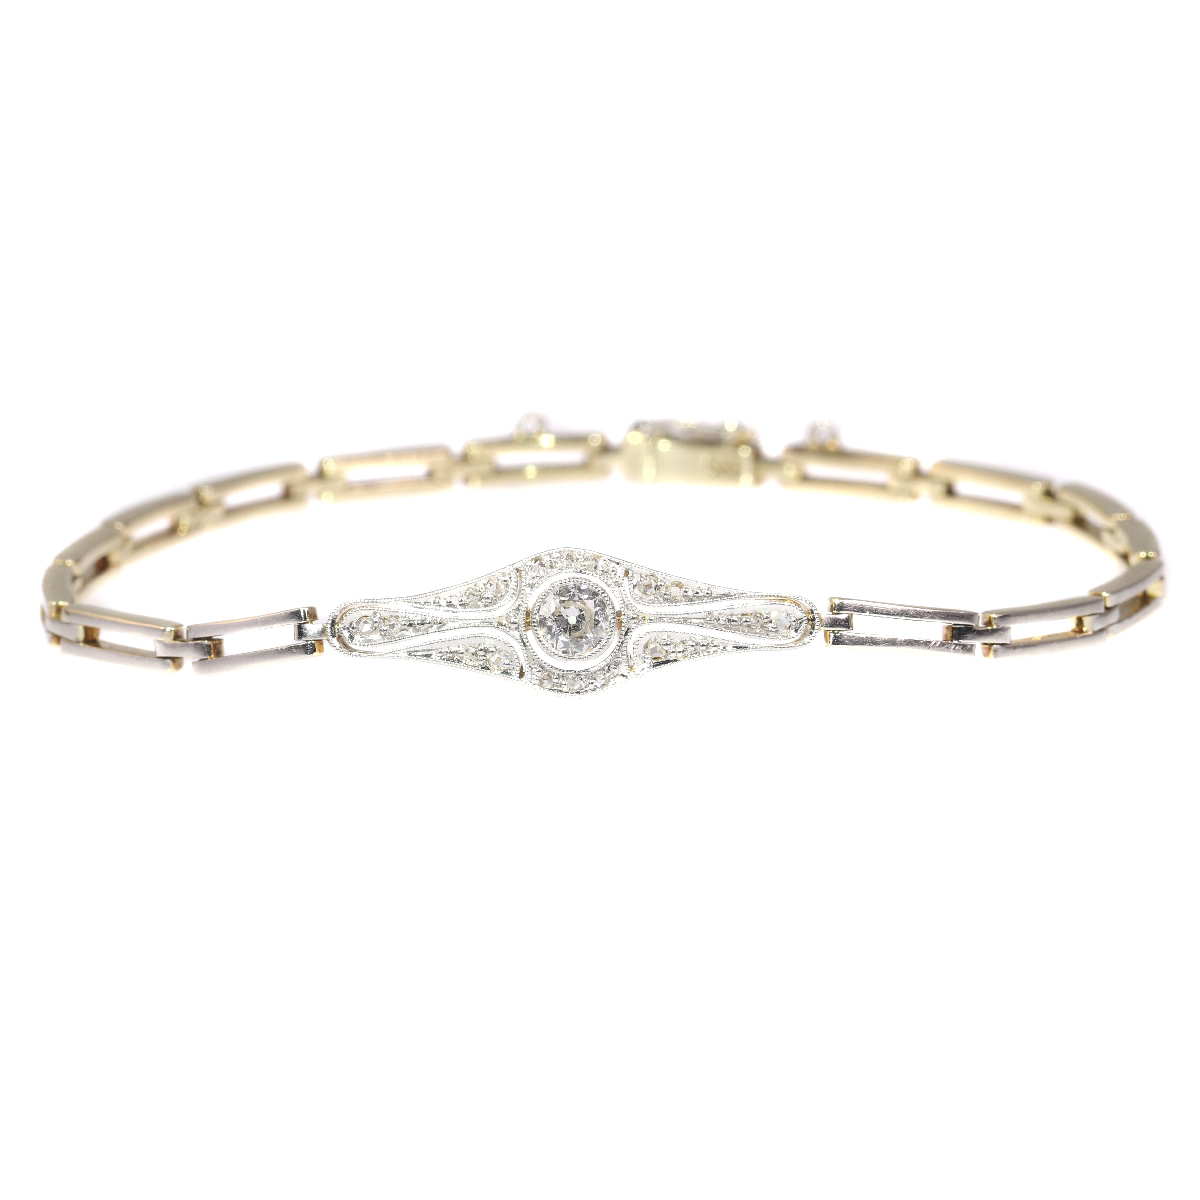 Vintage Art Deco - Belle Epoque diamond bracelet